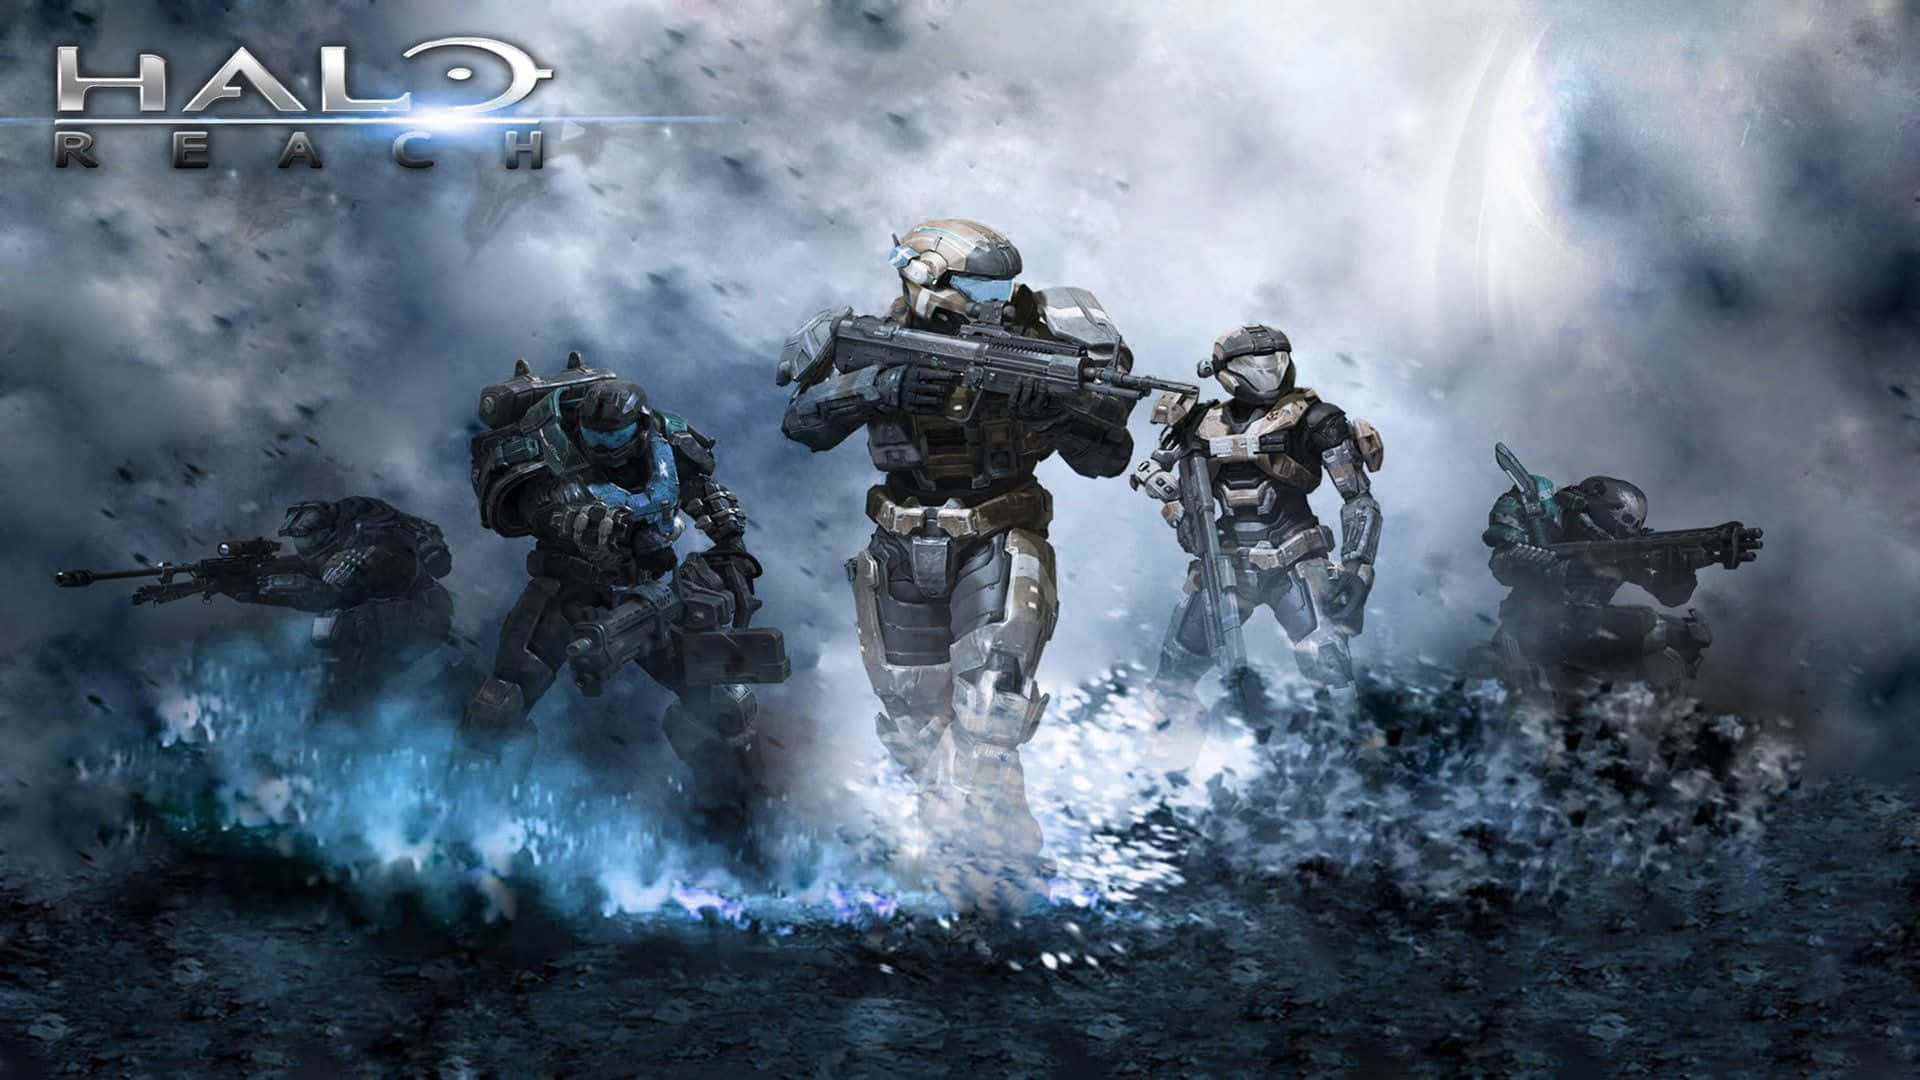 Intense Halo Battle in an Epic Sci-Fi Setting Wallpaper